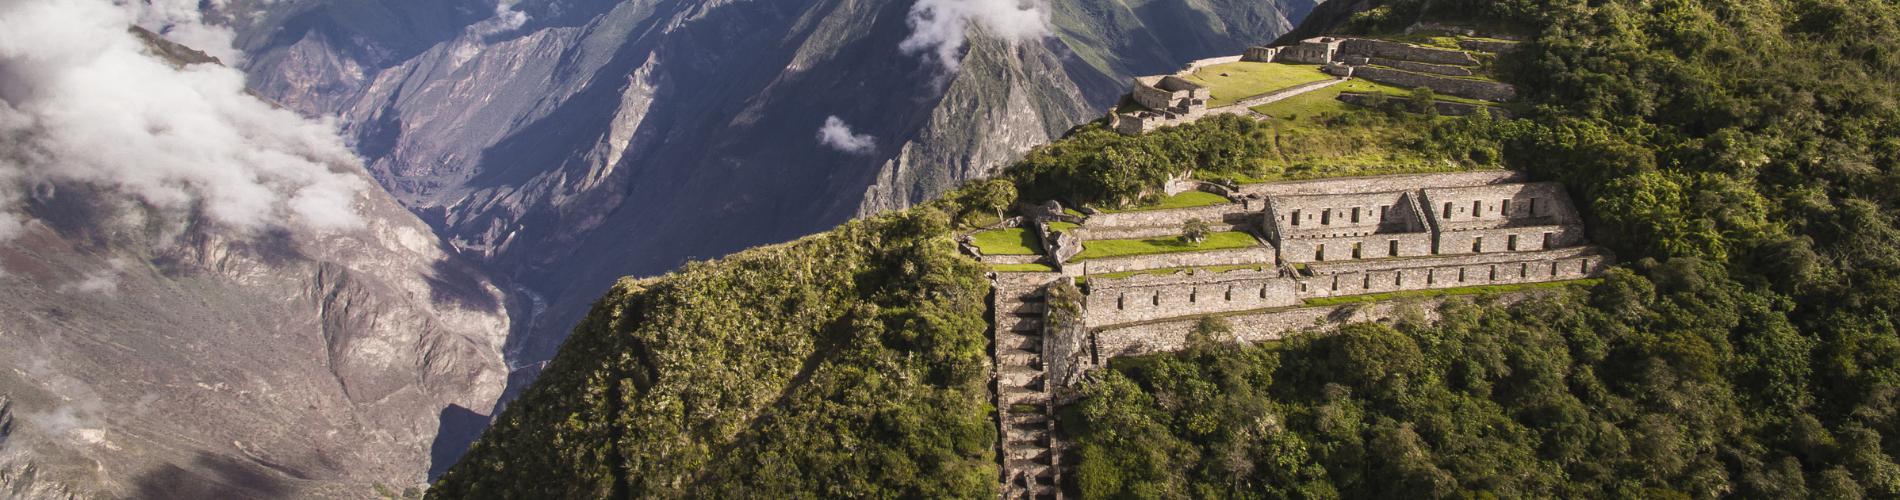 10 Cusco “MUST-DO'S” that DON'T include Machu Picchu